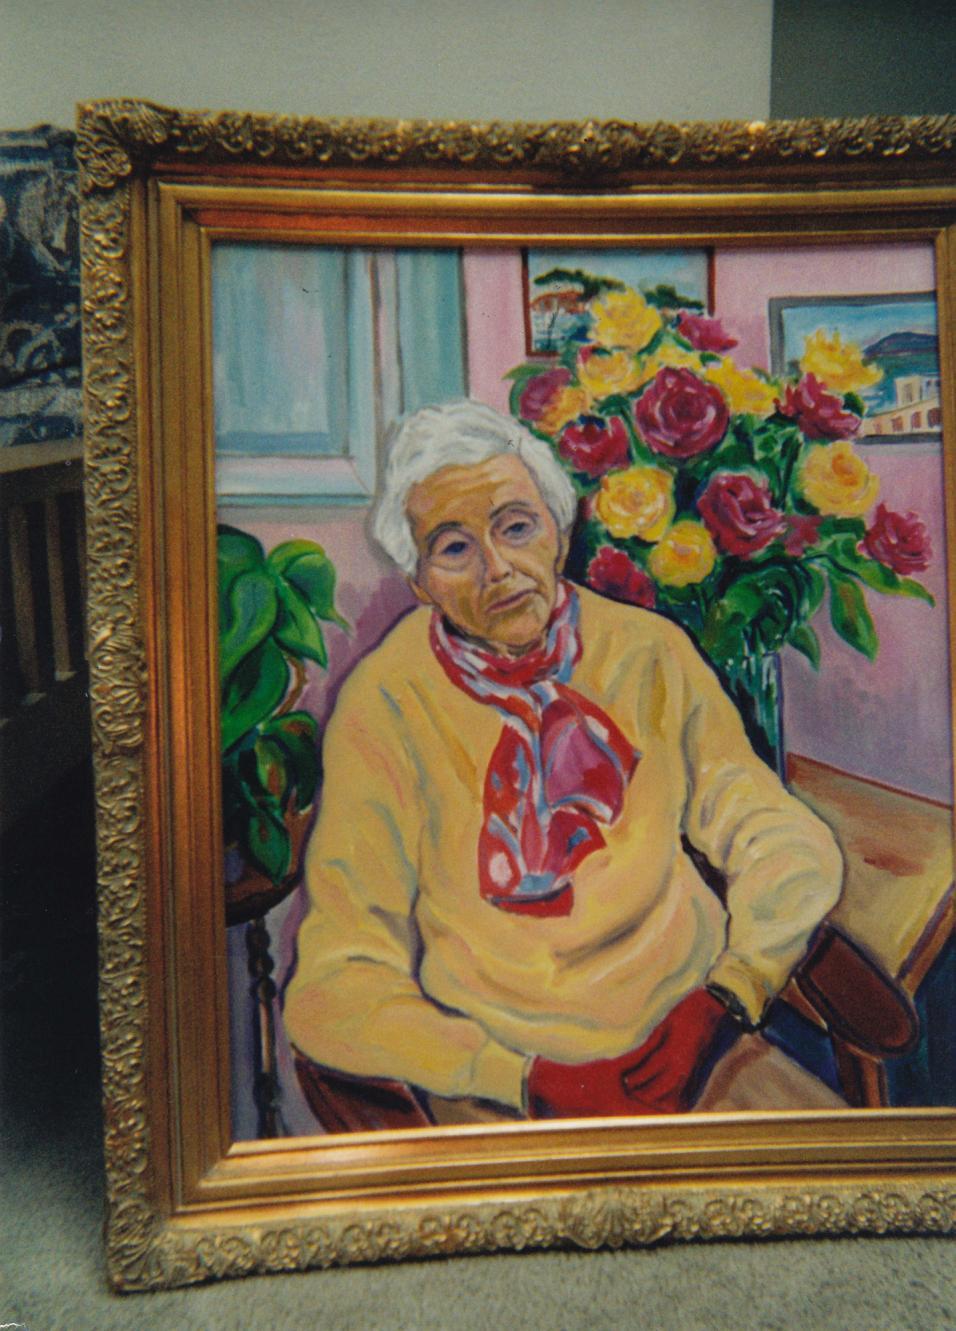 Myrrha Steinberg in her eighties